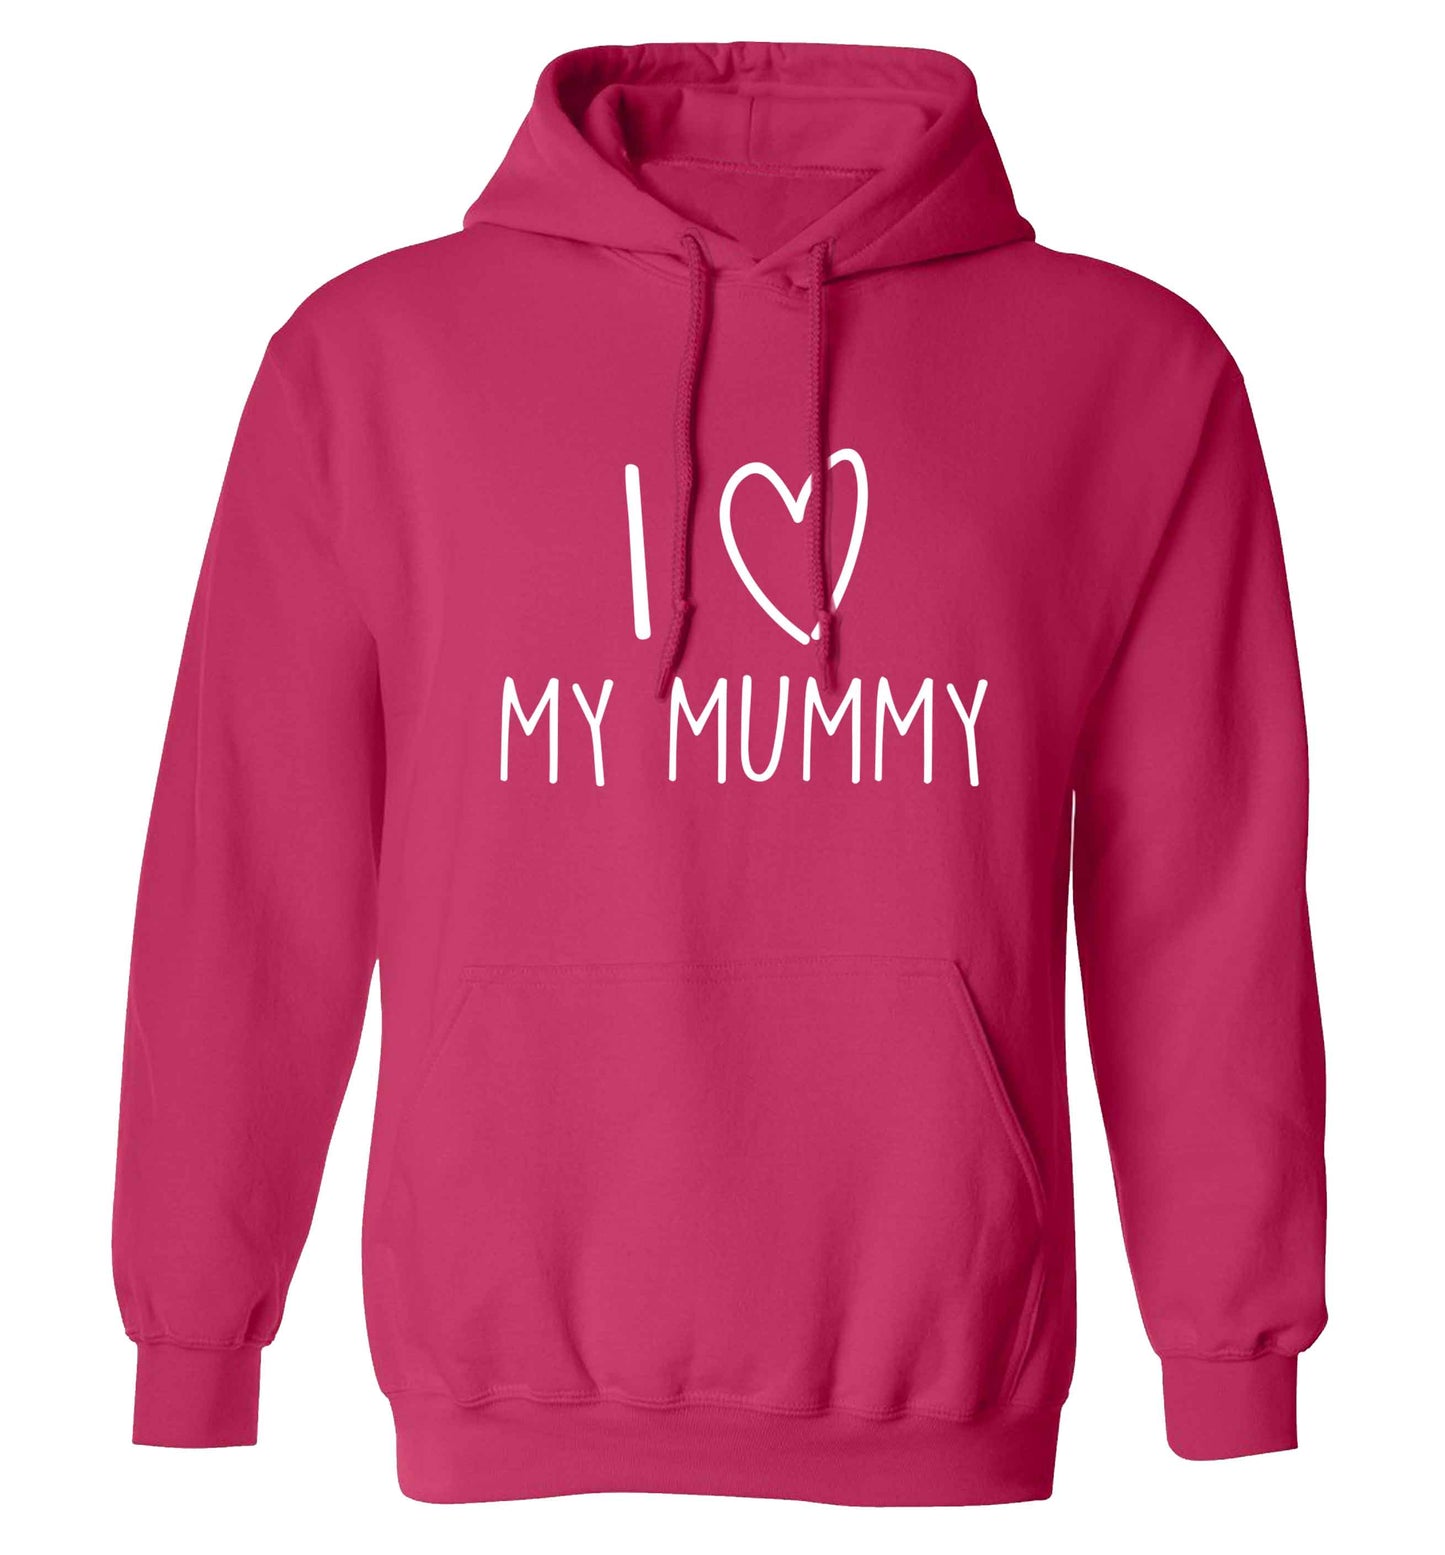 I love my mummy adults unisex pink hoodie 2XL